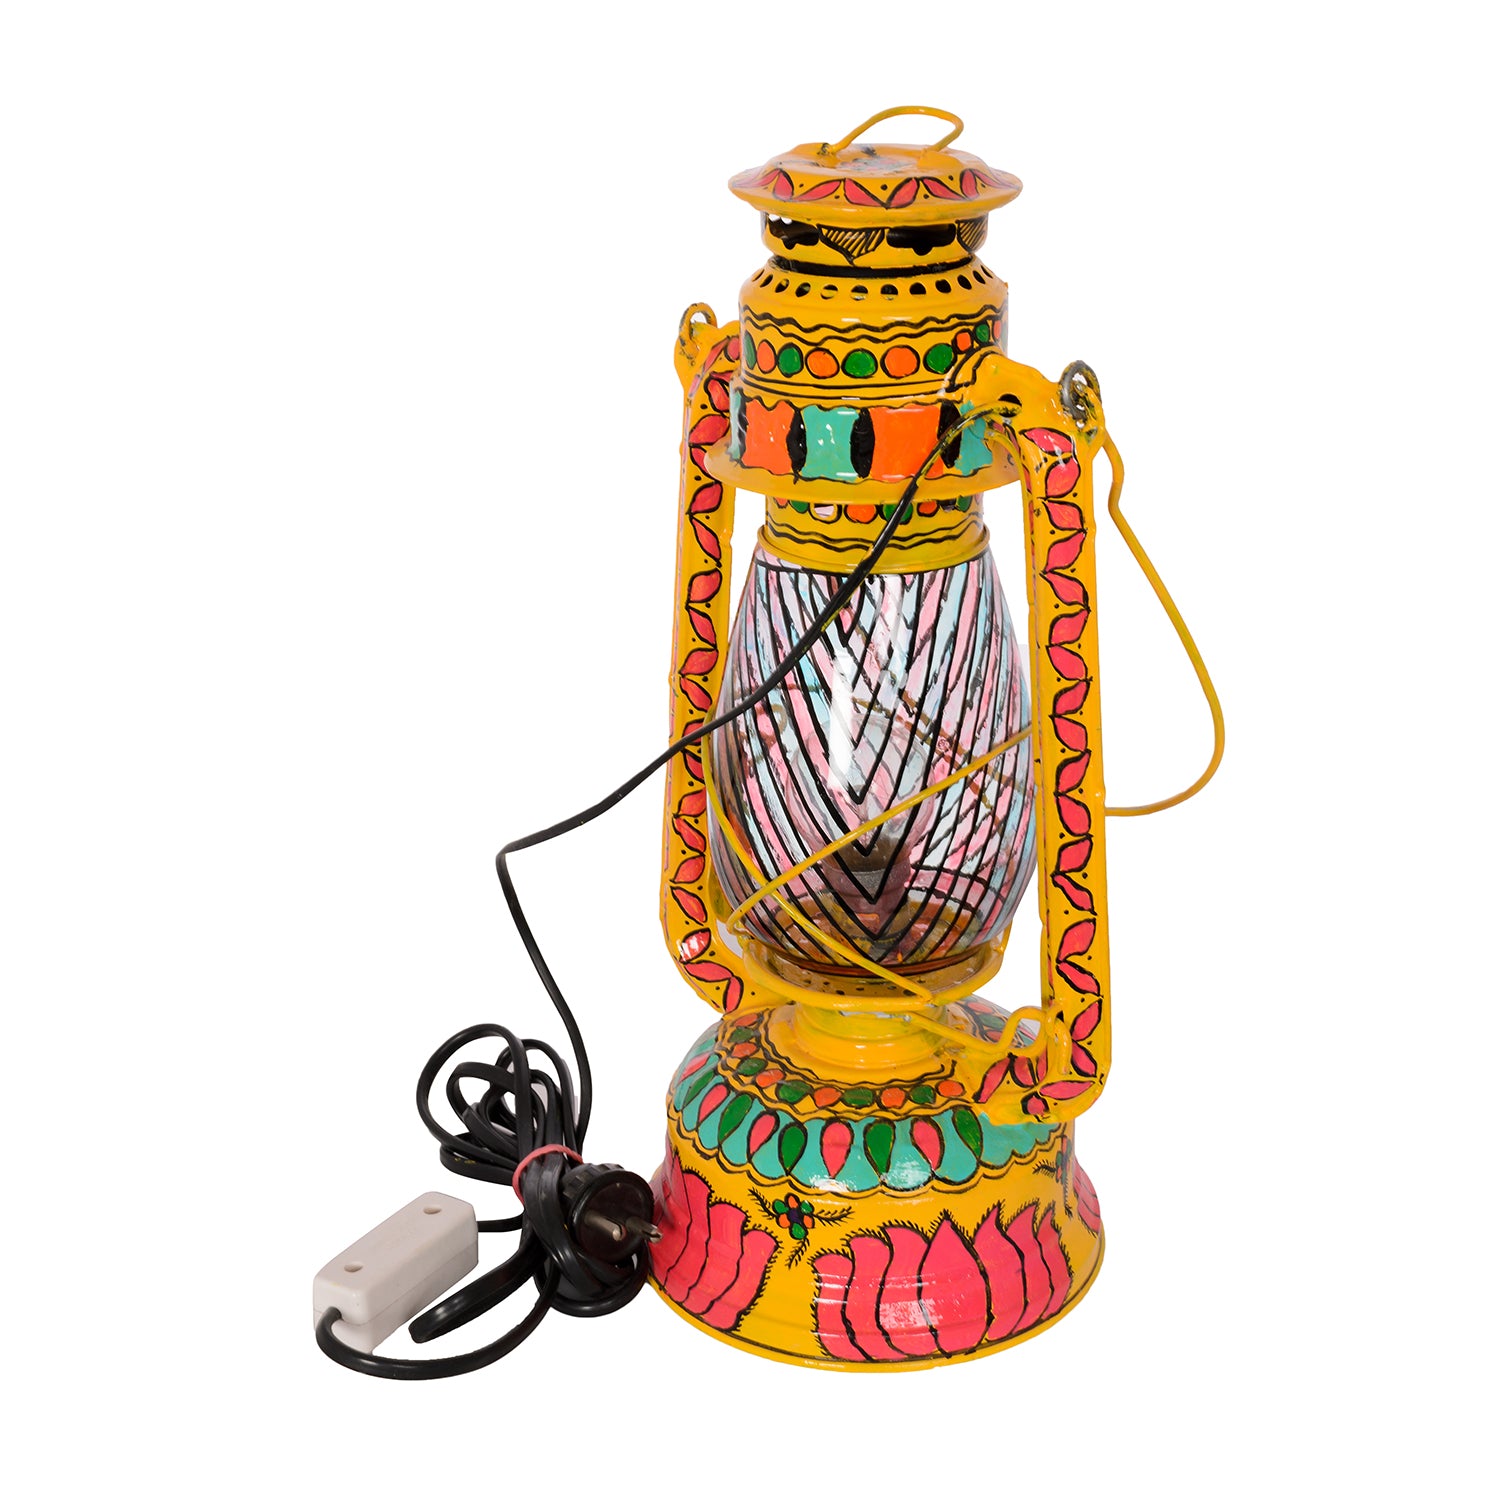 Hand Painted Hurrican Lantern with Bulb : Yellow Lotus